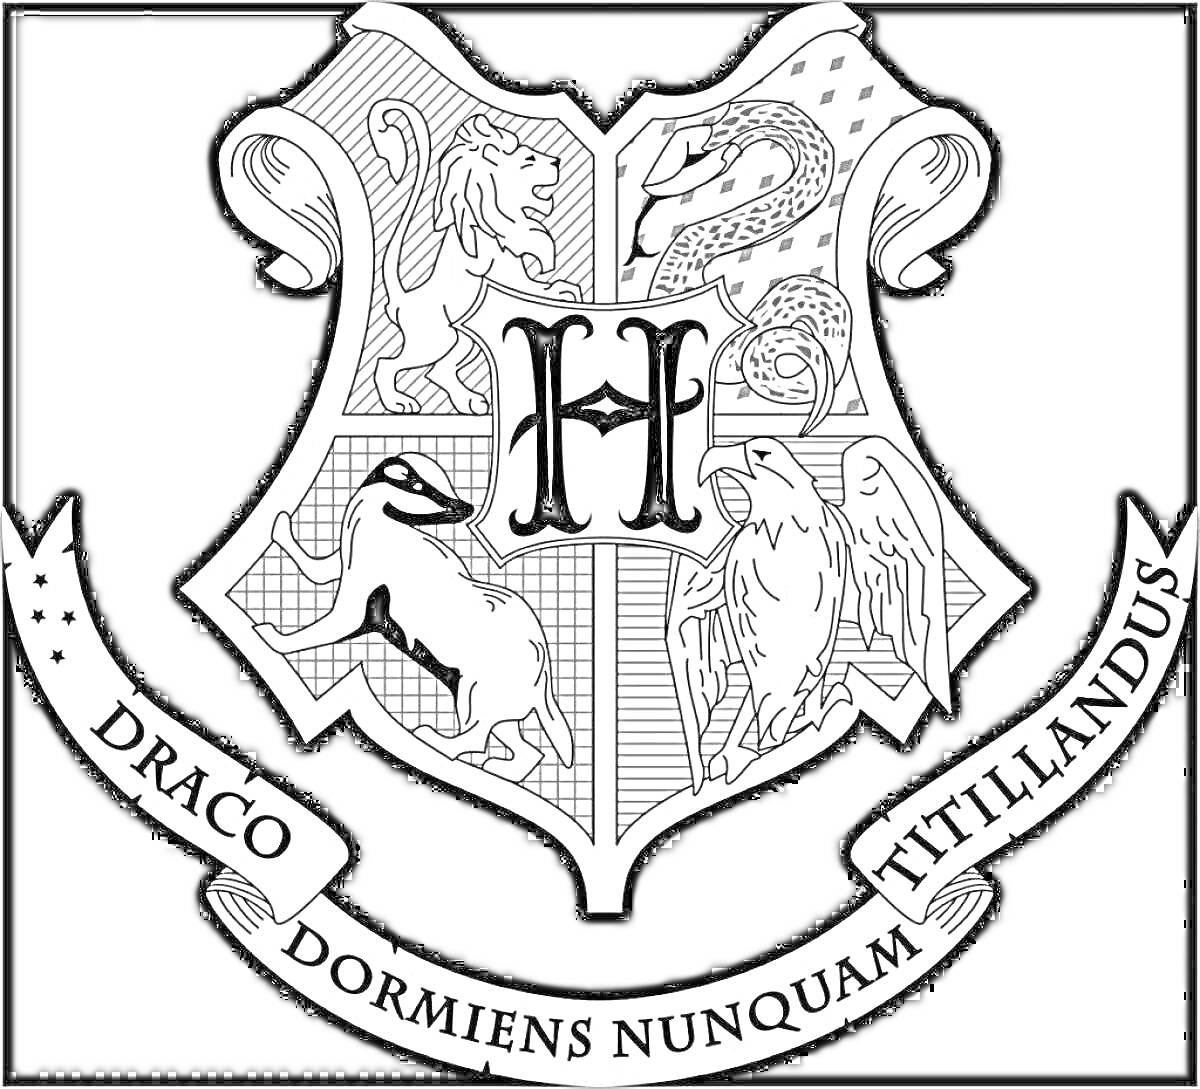 Герб Хогвартса с изображениями льва, орла, барсука и змеи, ленты с девизом 